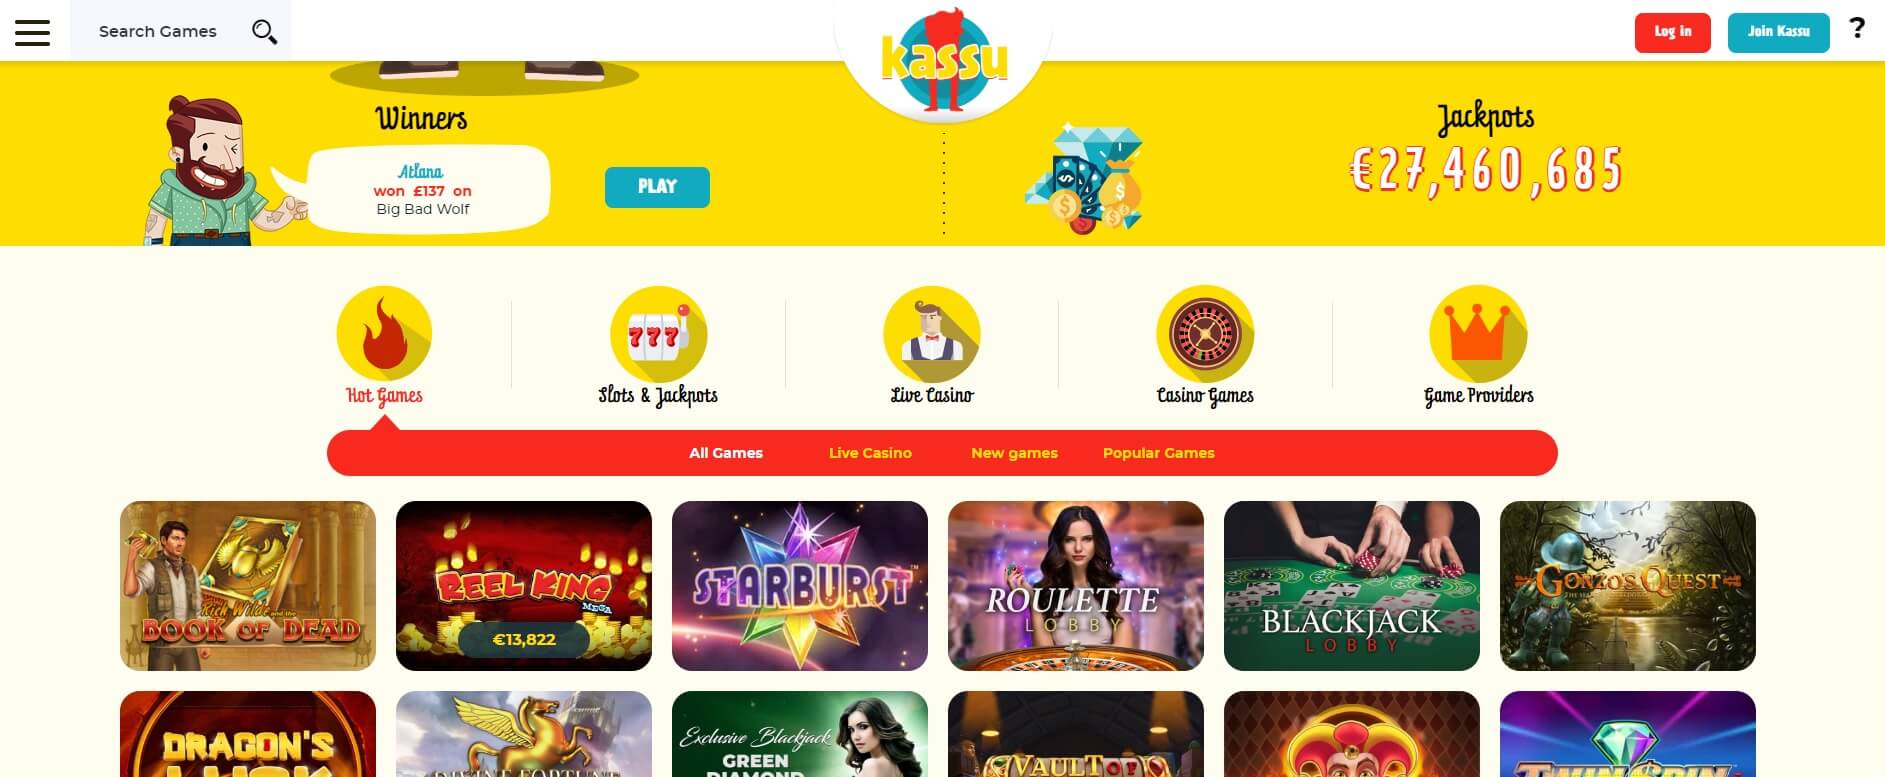 kassu casino games and slots screenshot